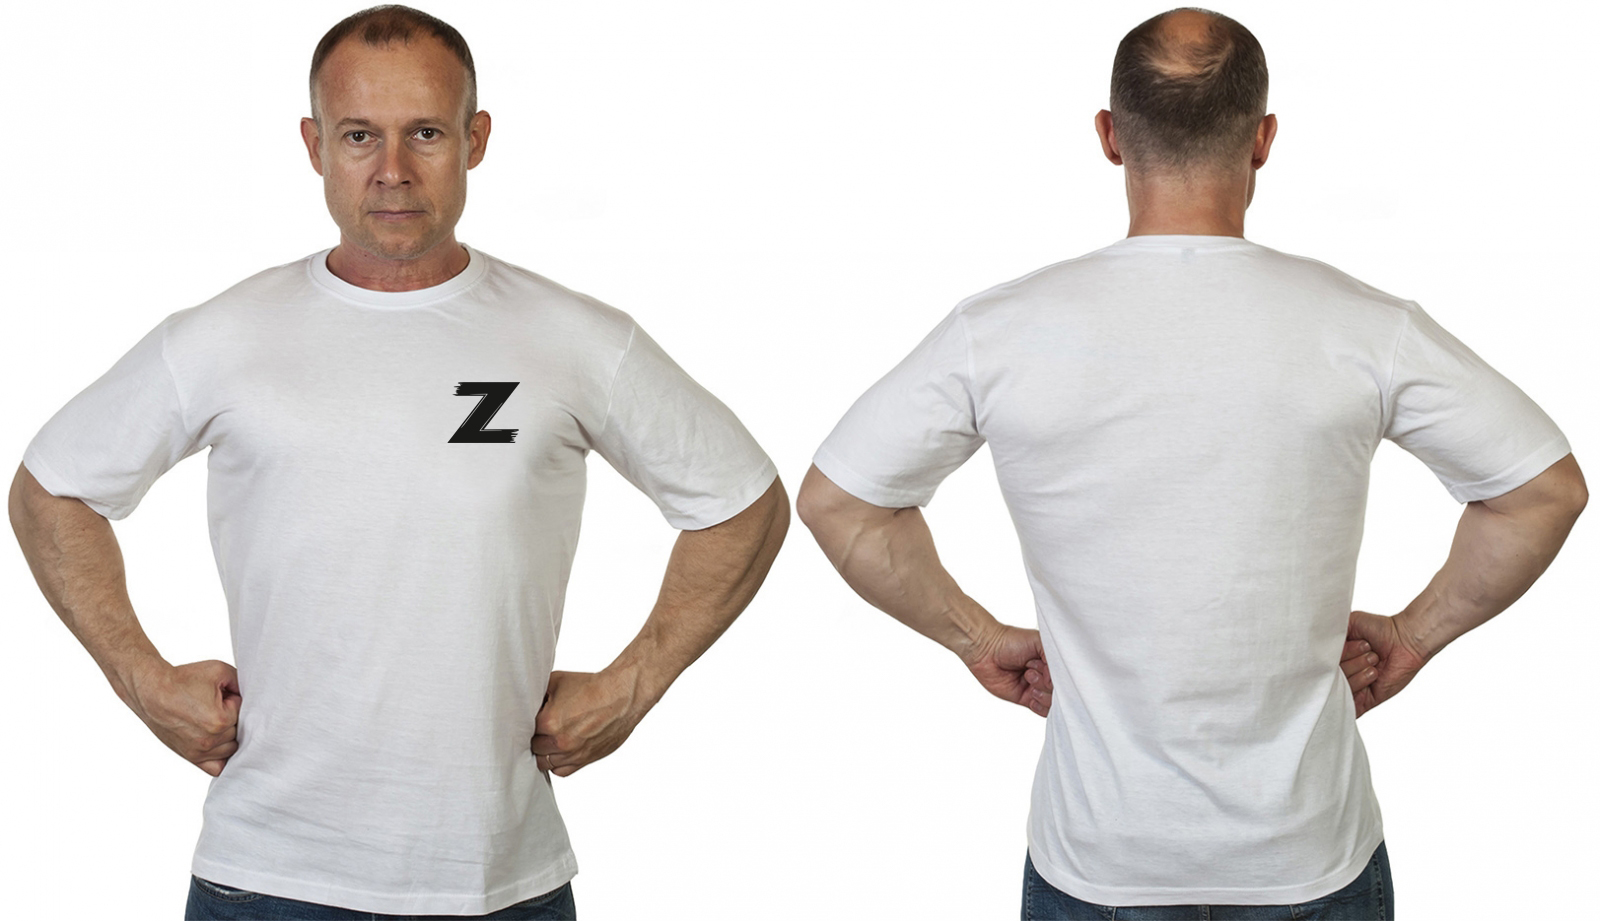 Заказать онлайн мужскую футболку Z